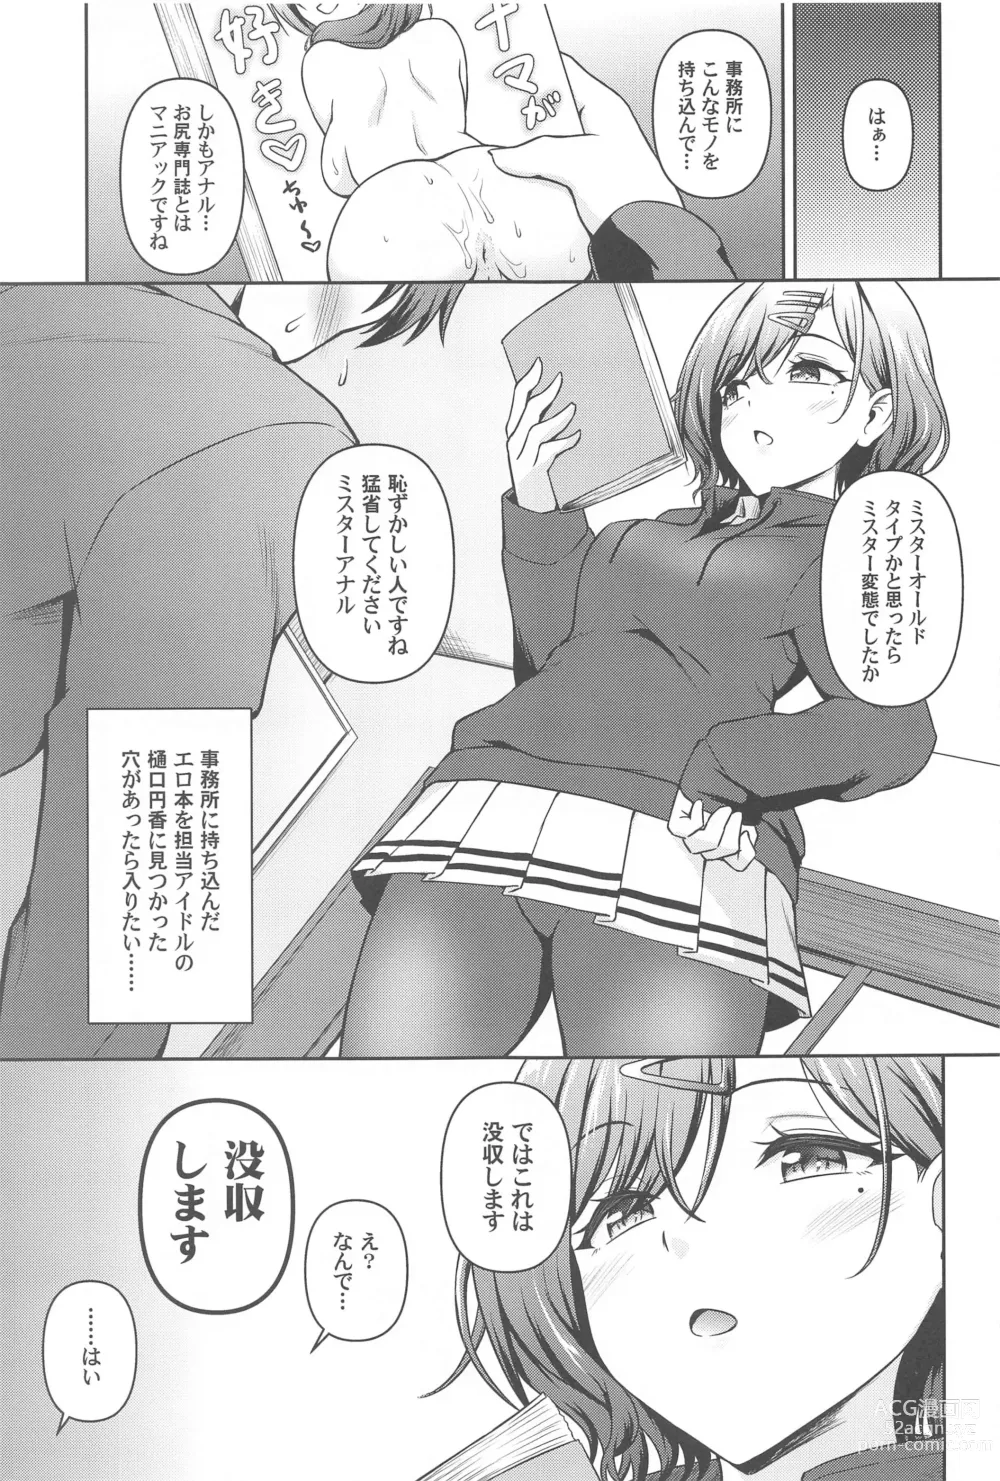 Page 2 of doujinshi Mado Ana